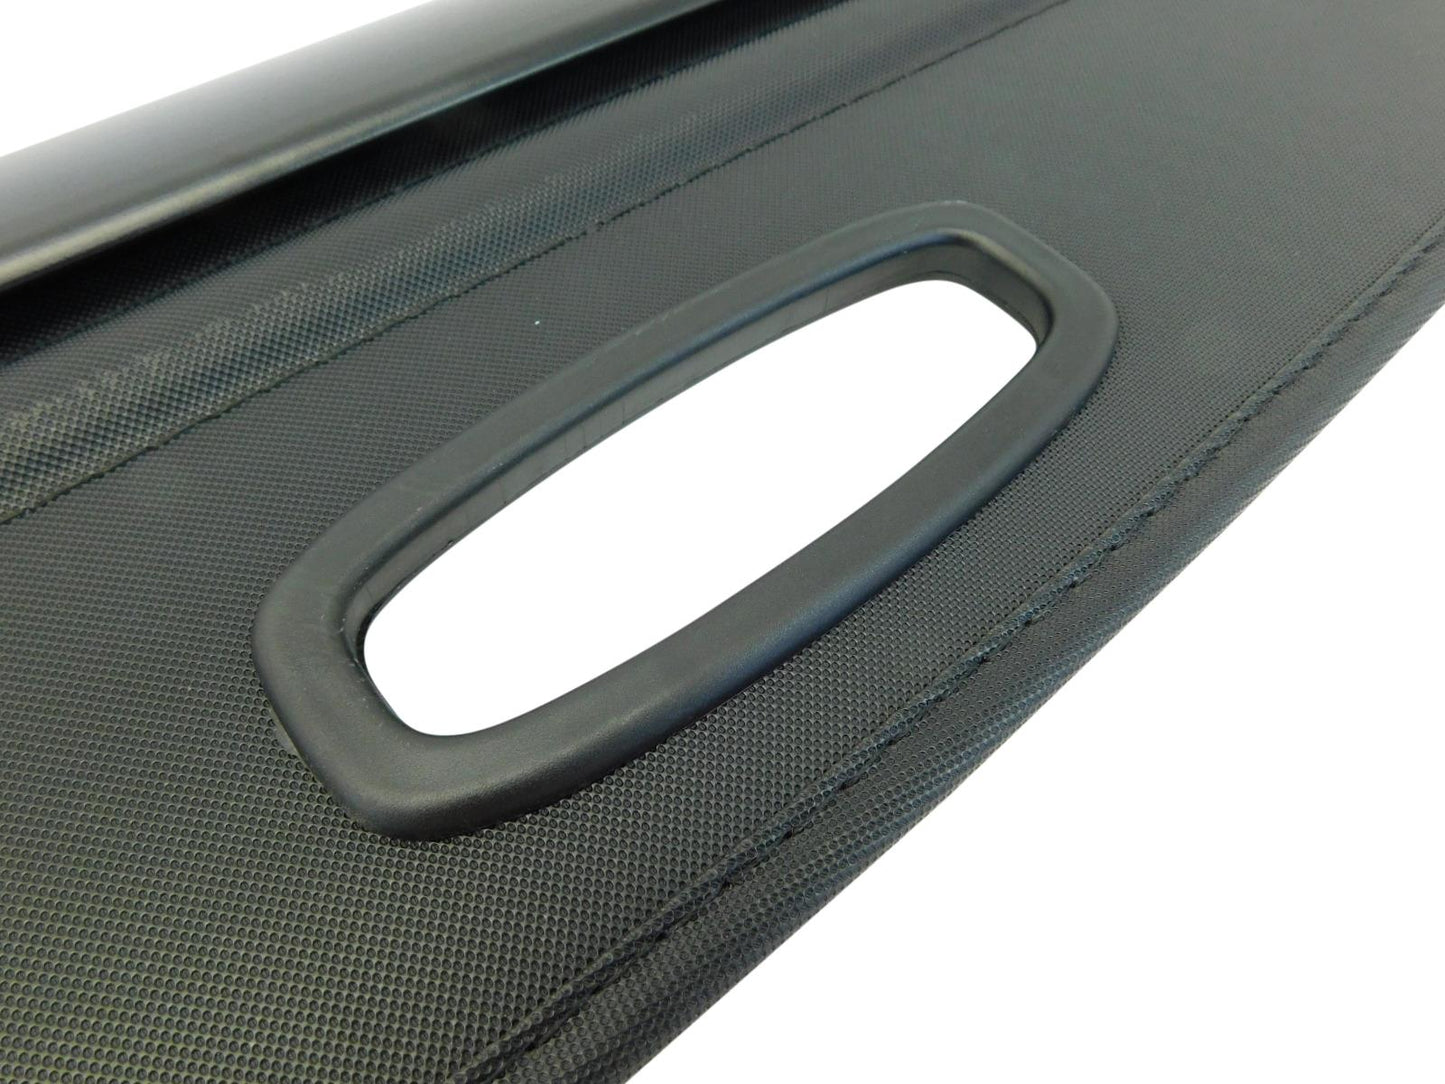 Mercedes ML (W166) Black Retractable Parcel Shelf Boot Load Cover 2012-2015